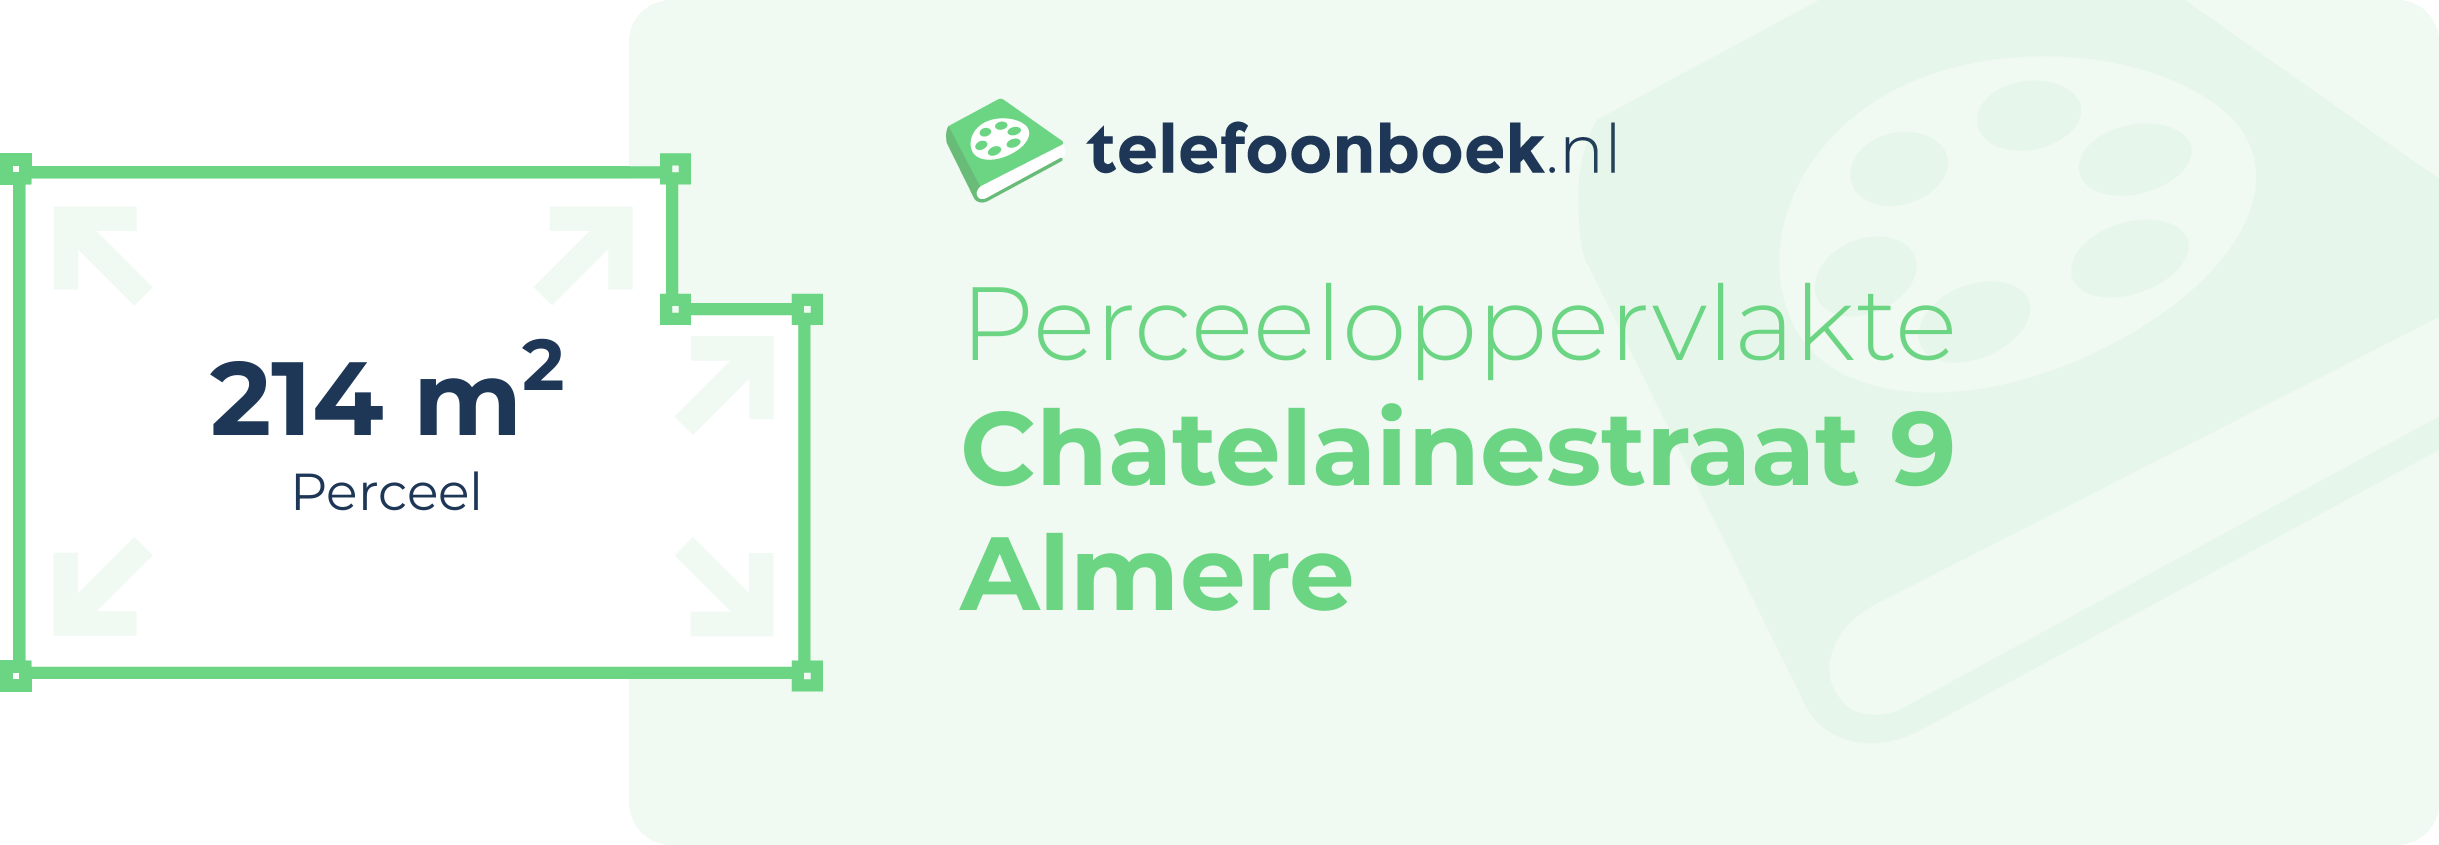 Perceeloppervlakte Chatelainestraat 9 Almere